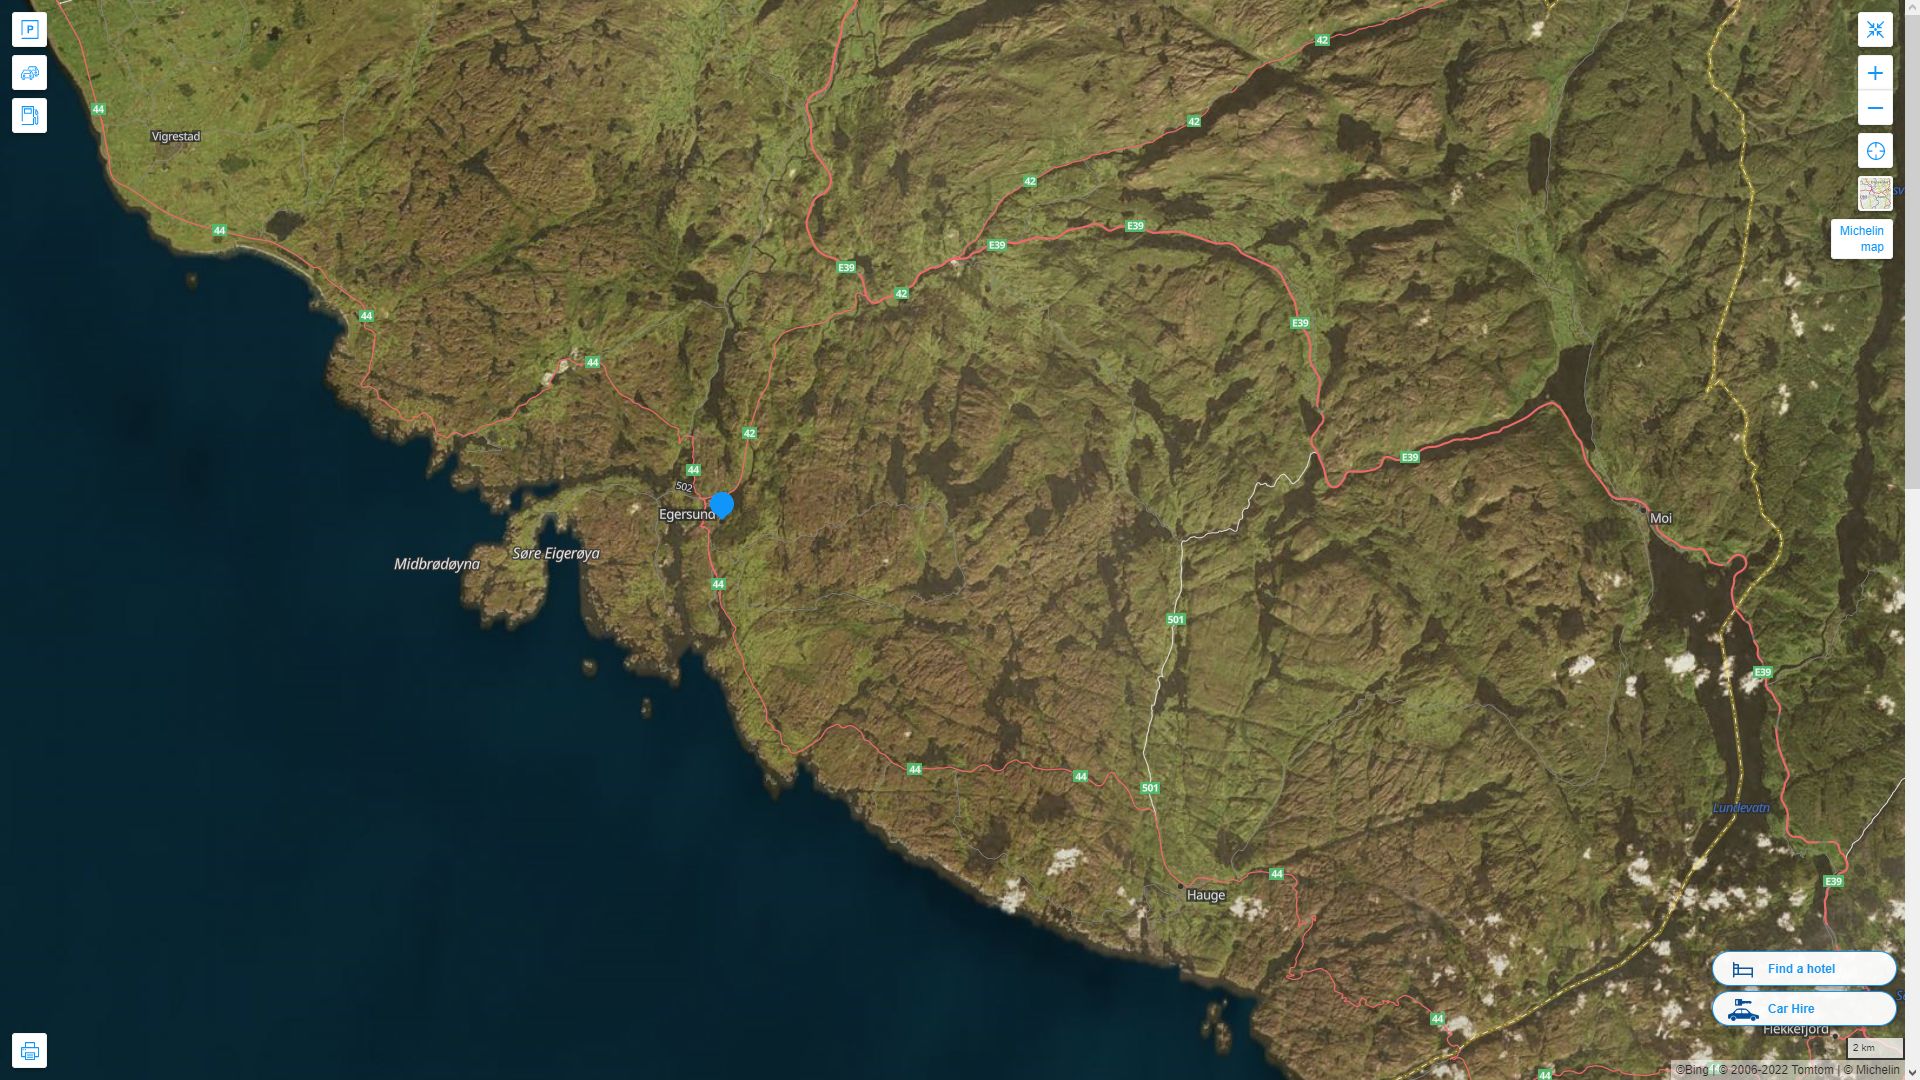 Egersund Norvege Autoroute et carte routiere avec vue satellite